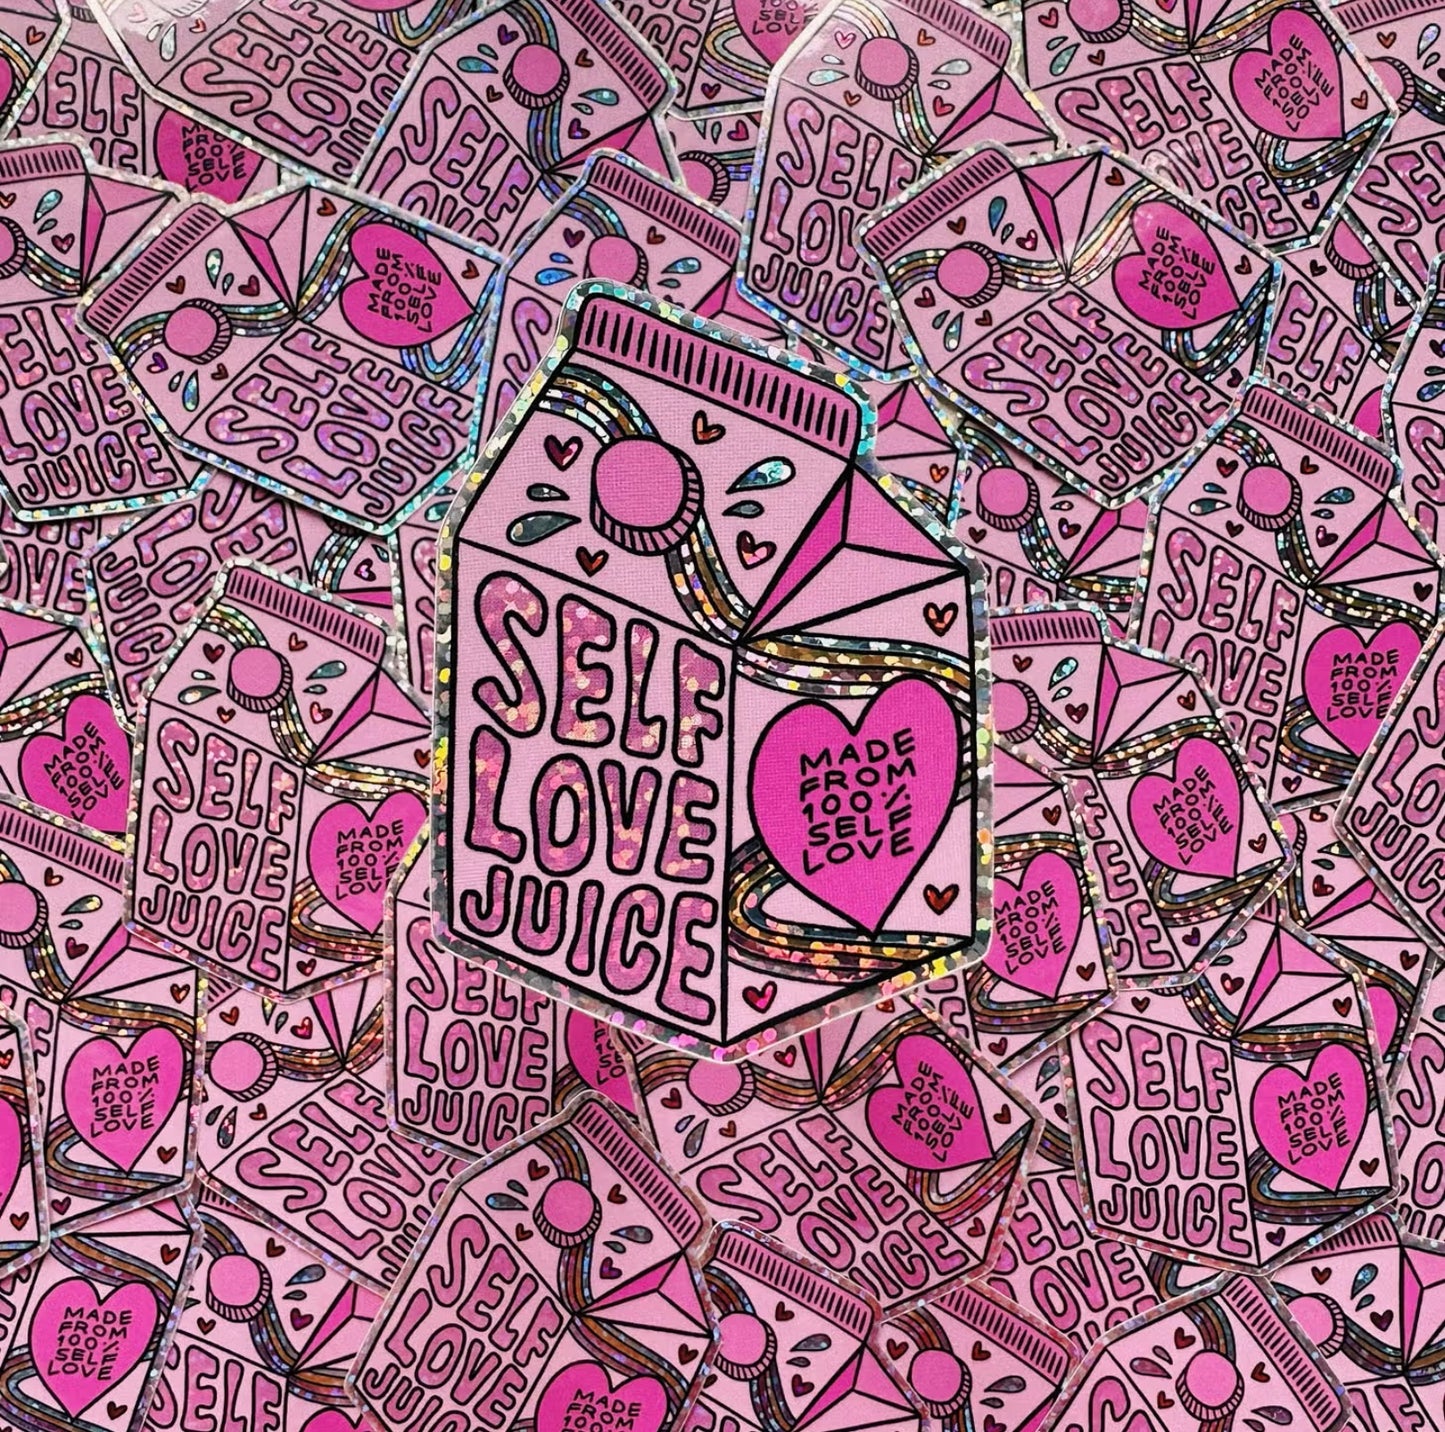 Self Love Juice Box Glitter Vinyl Sticker